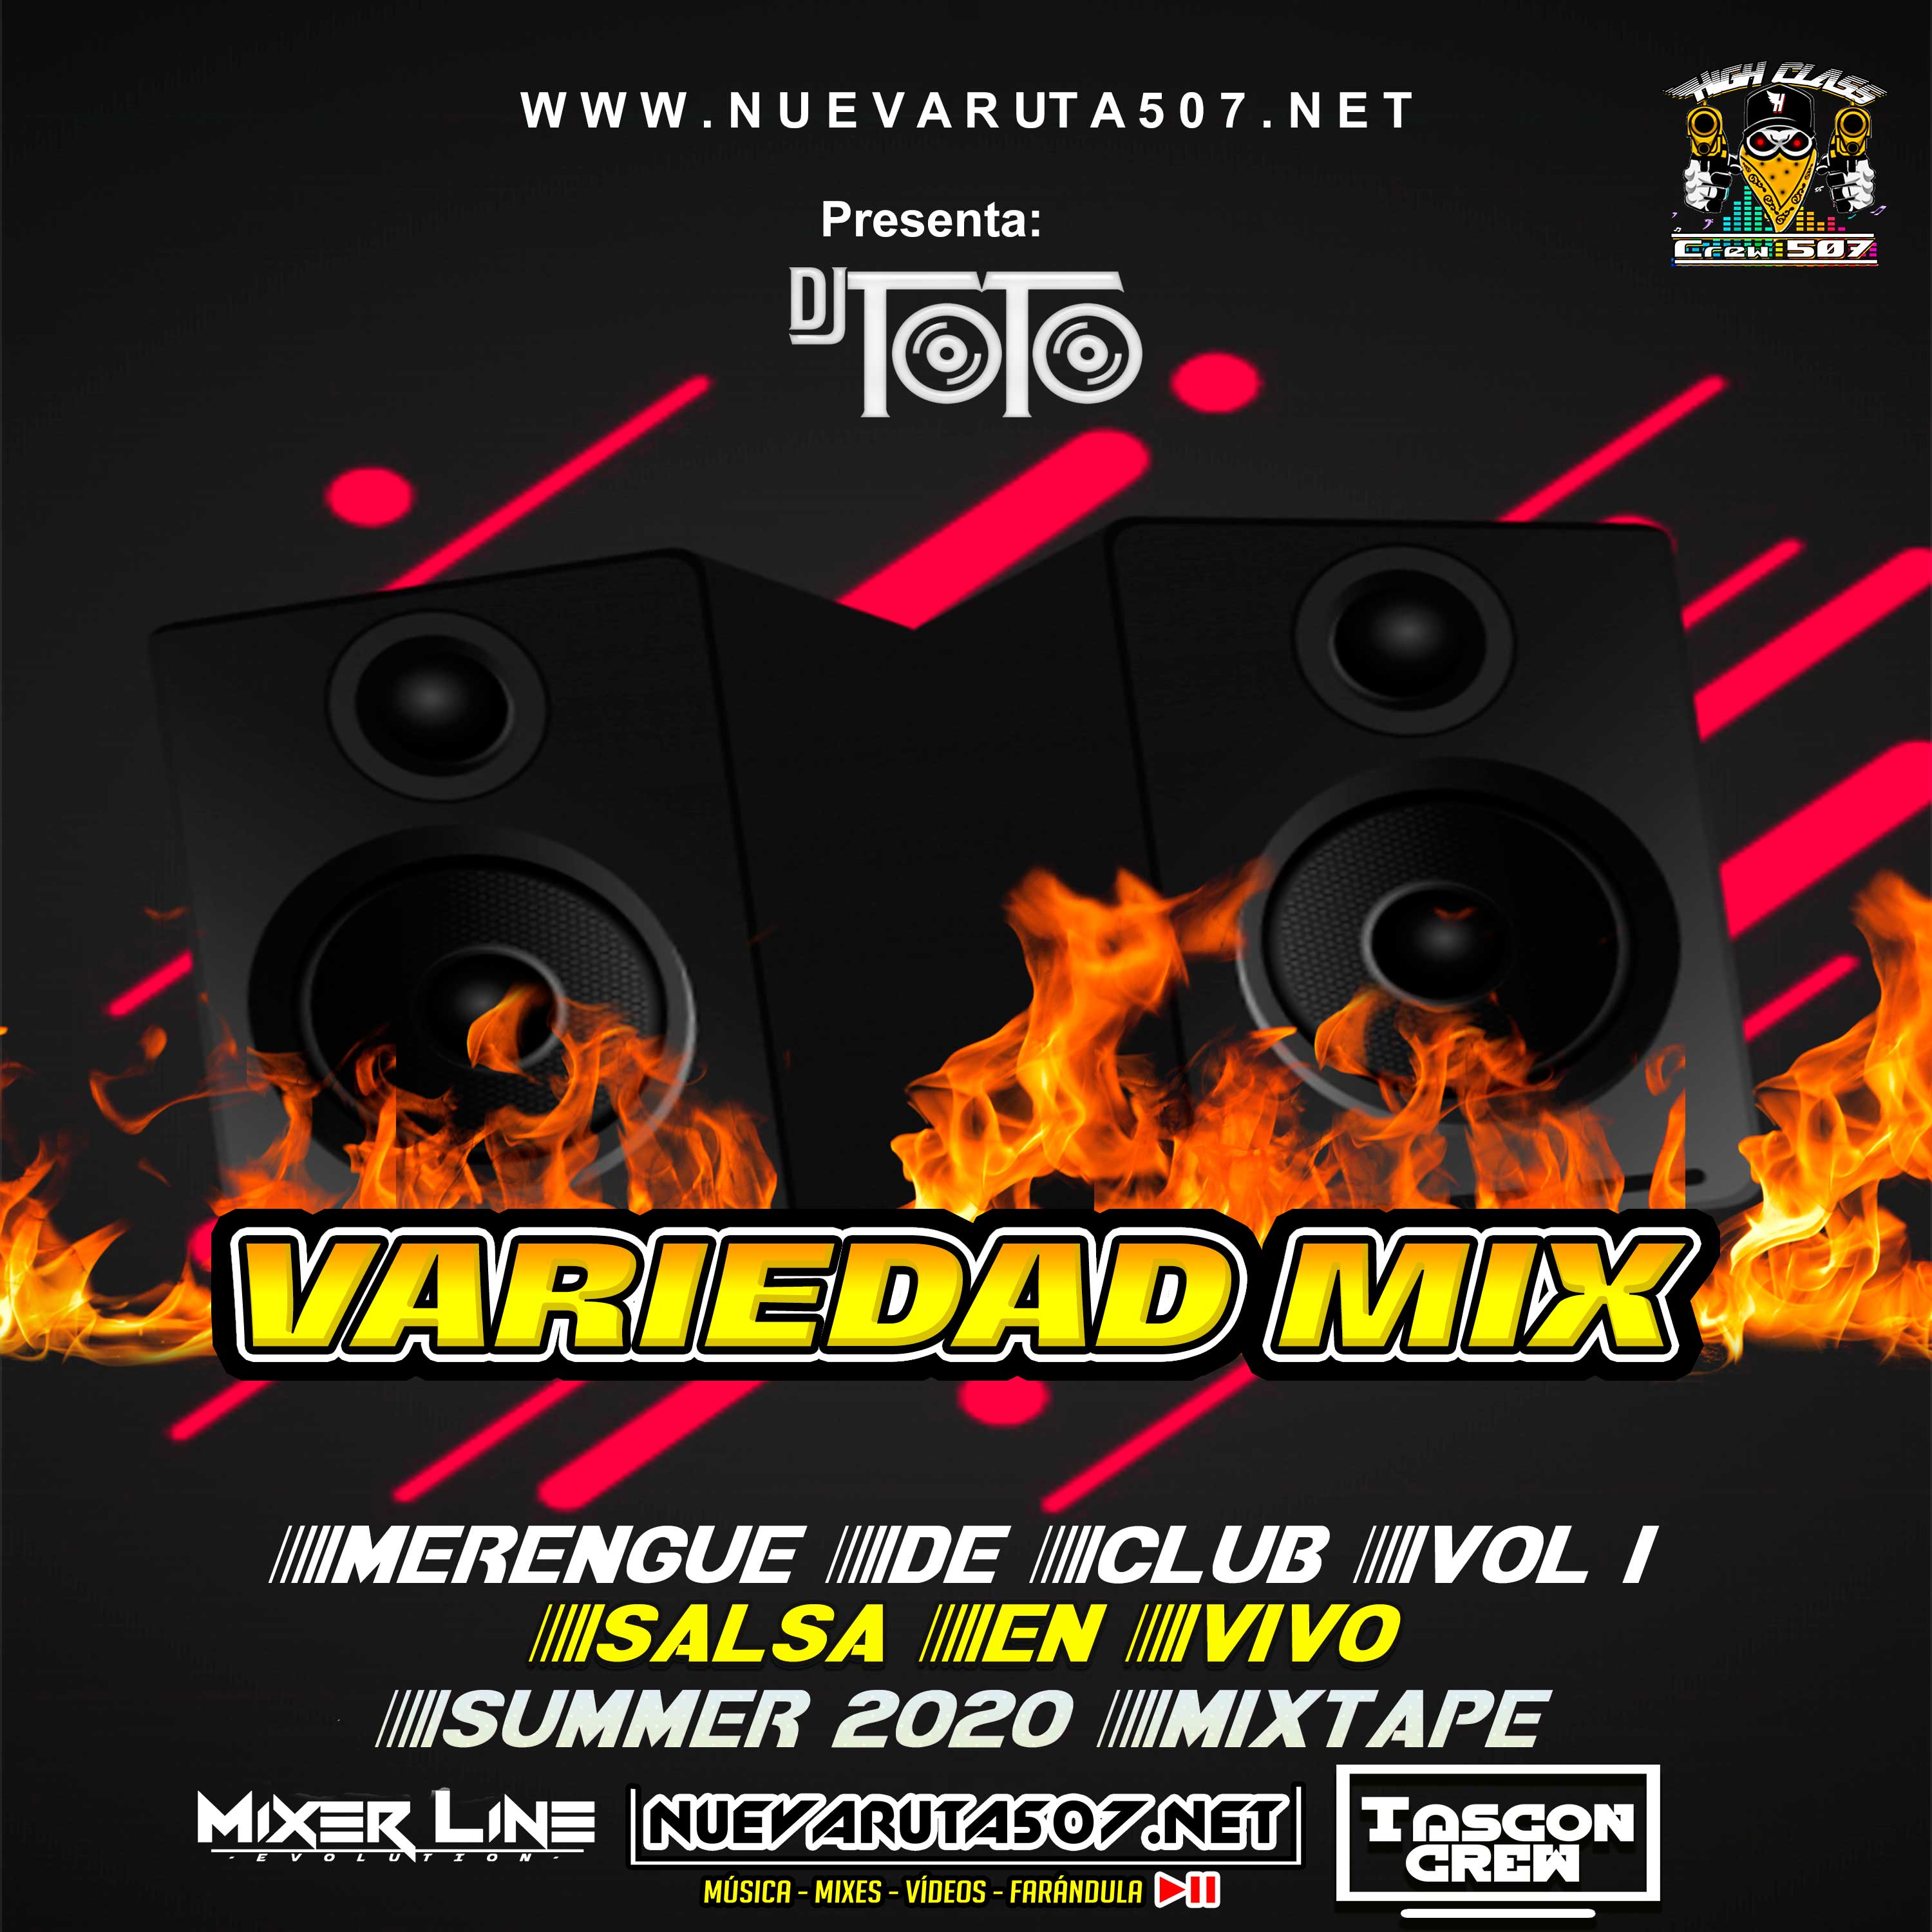 Summer 2020 Mixtape DJ Toto507.mp3